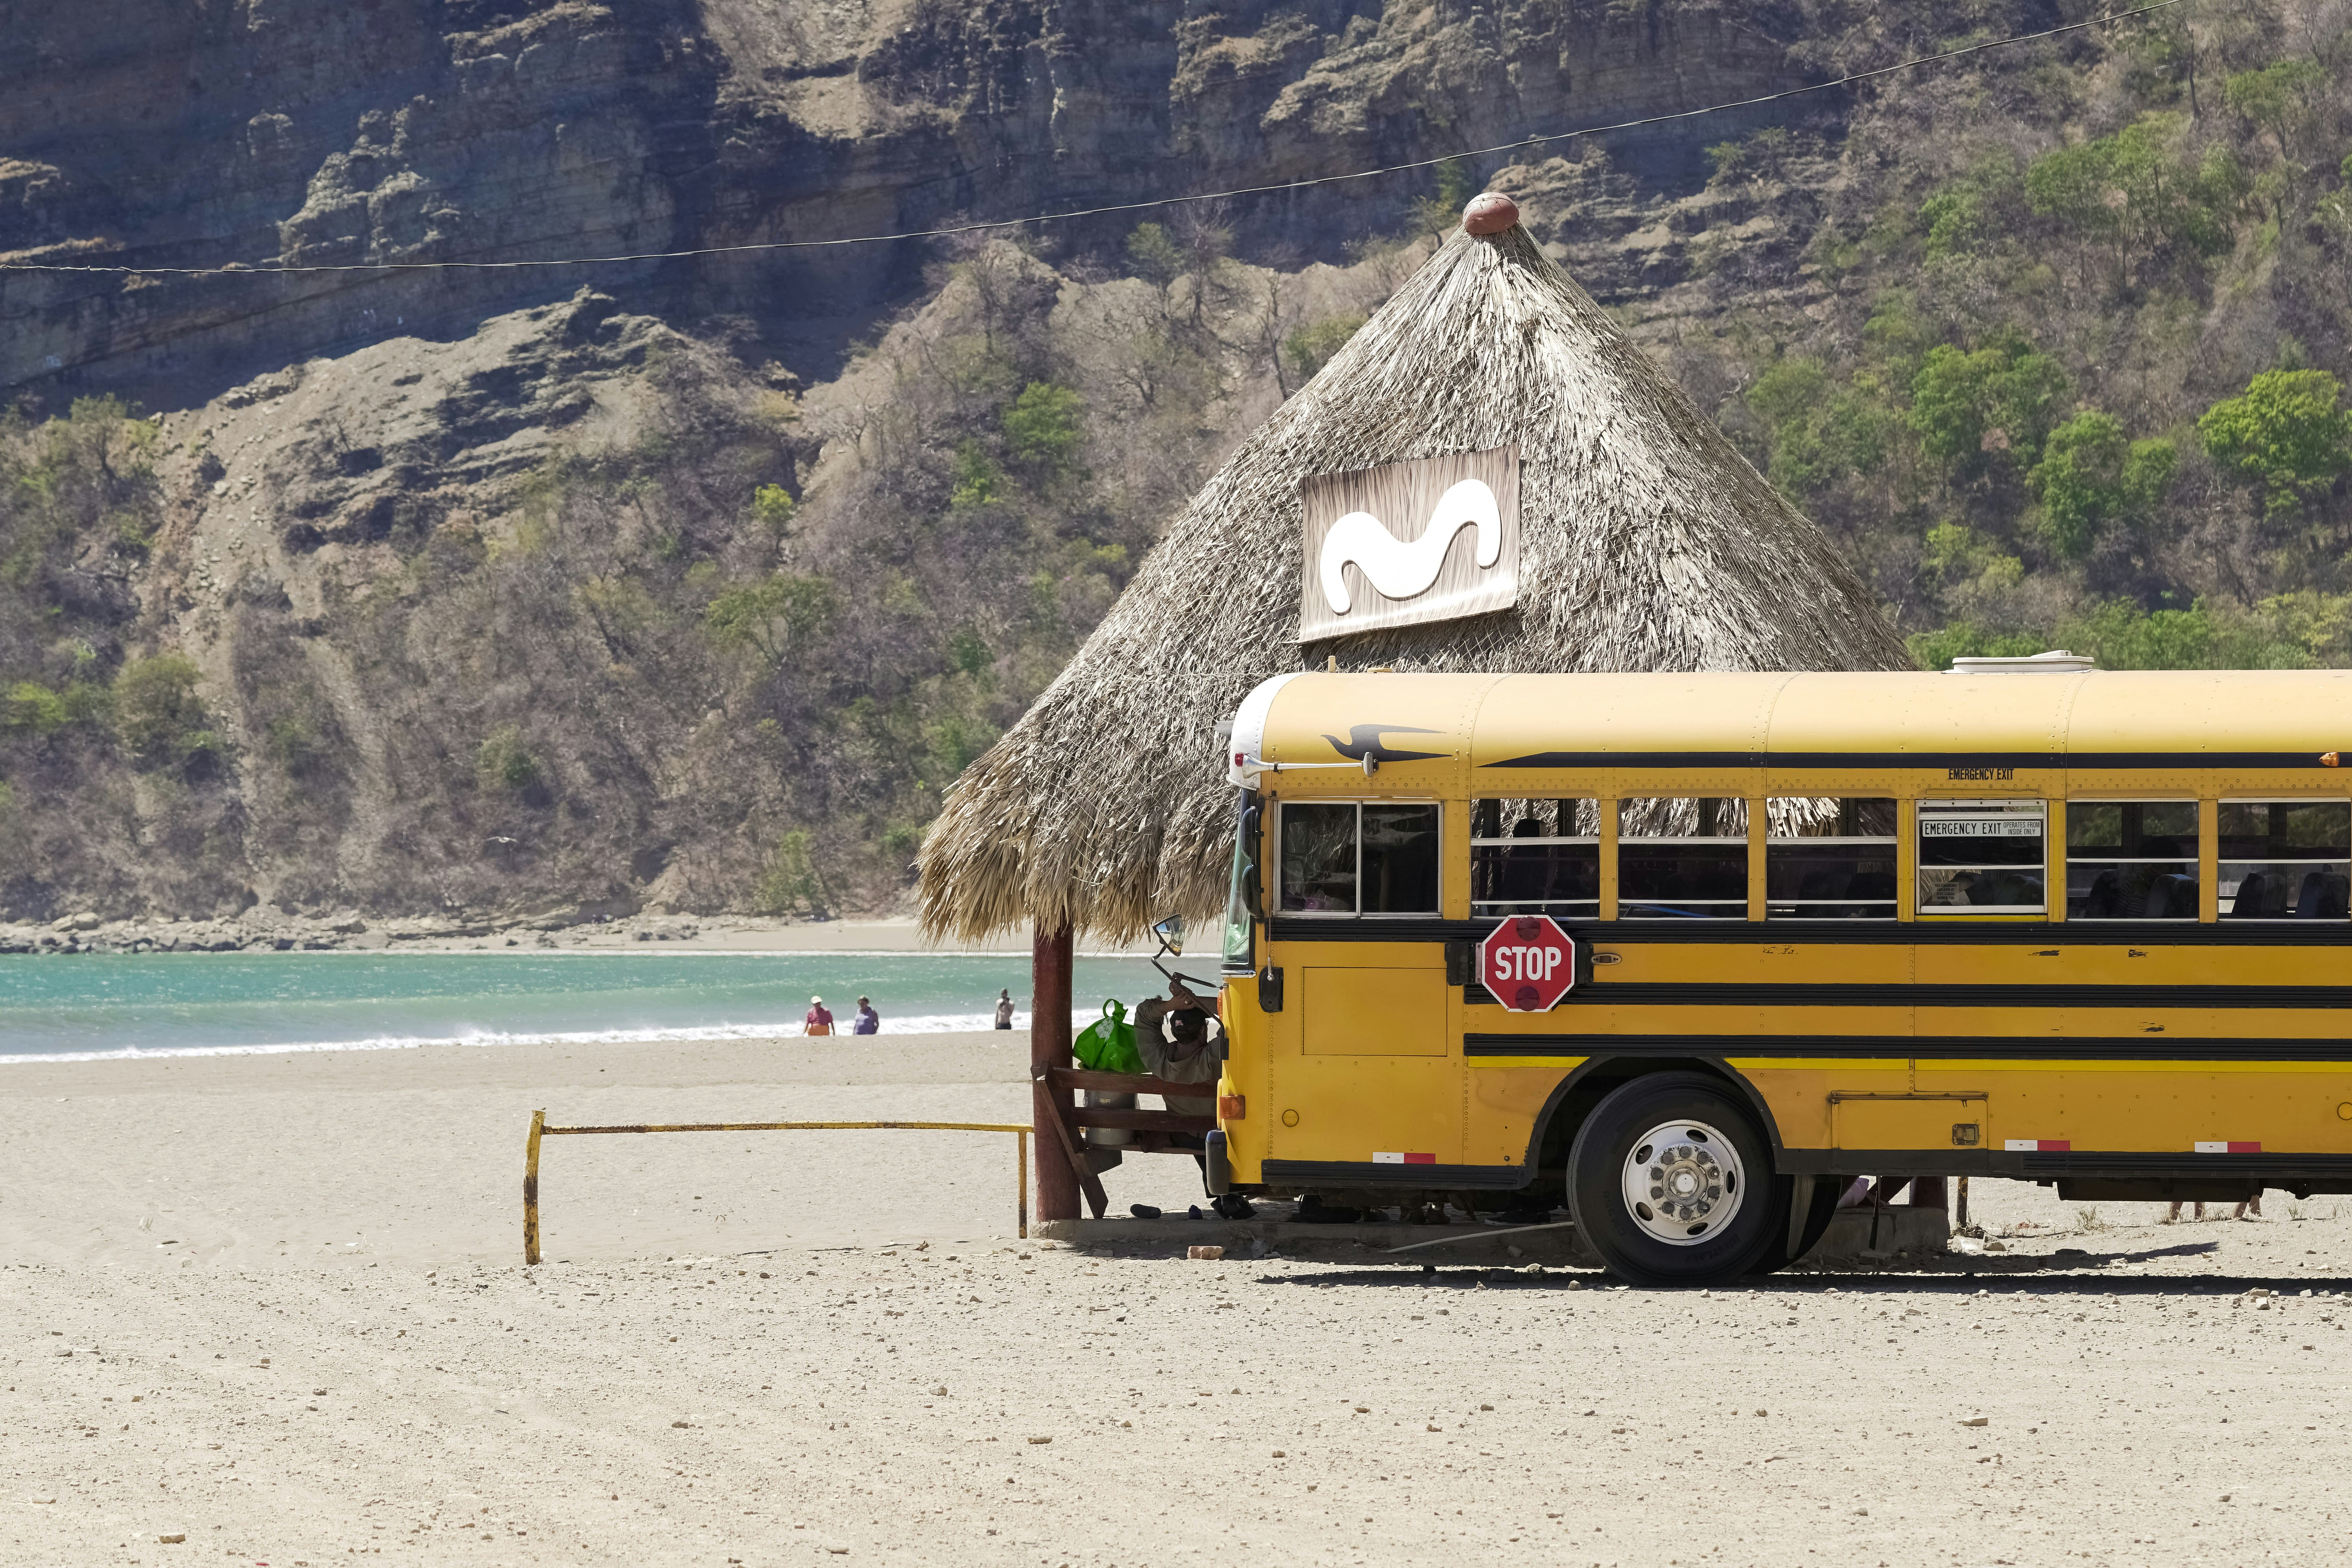 yellow school bus on beach during daytime